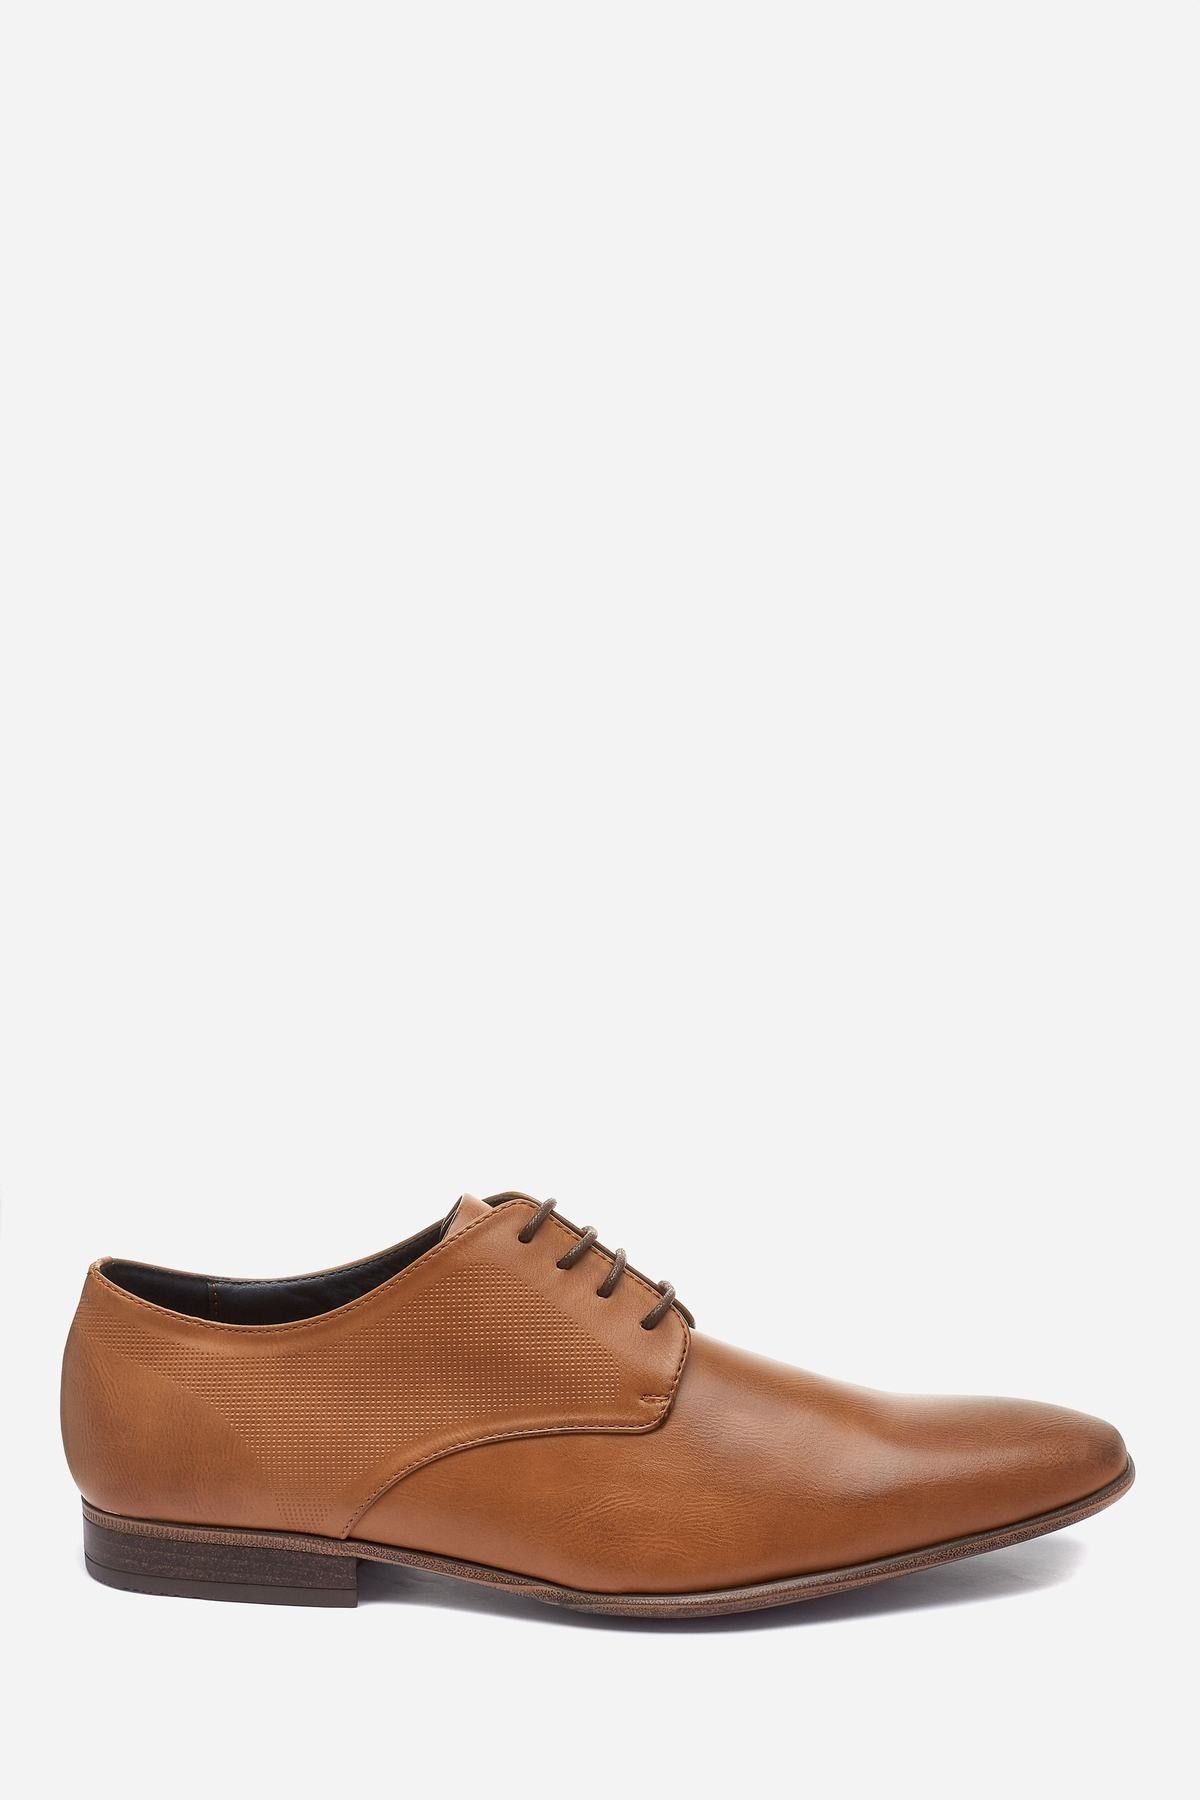 NEXT Textured Derby Shoes Tan Men Shoes|akgalleria.com